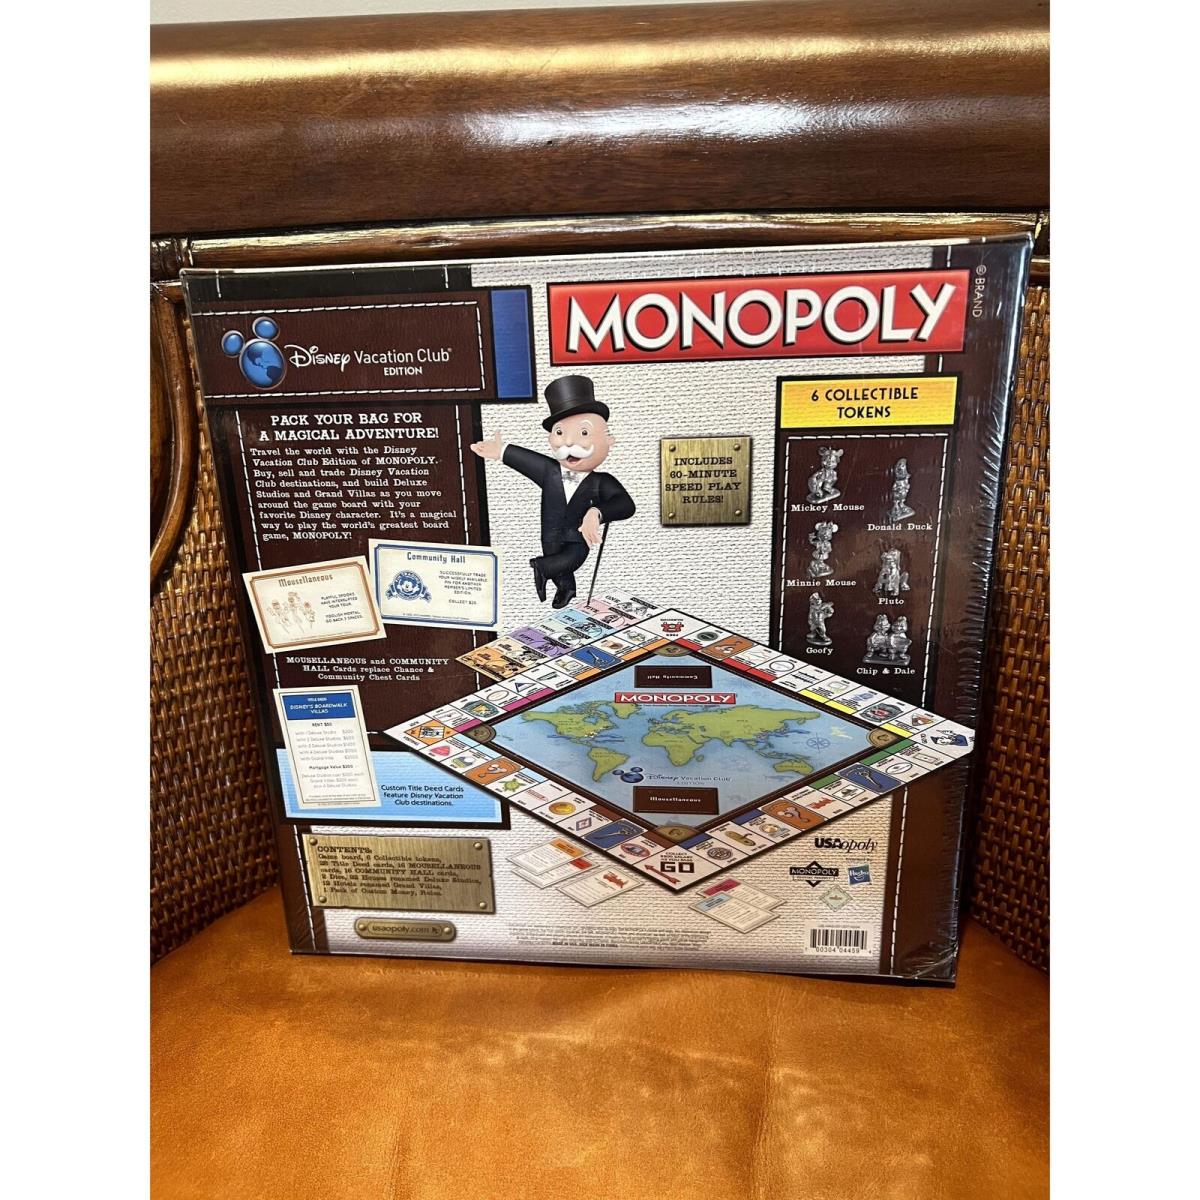 Disney Vacation Club Edition Monopoly Game